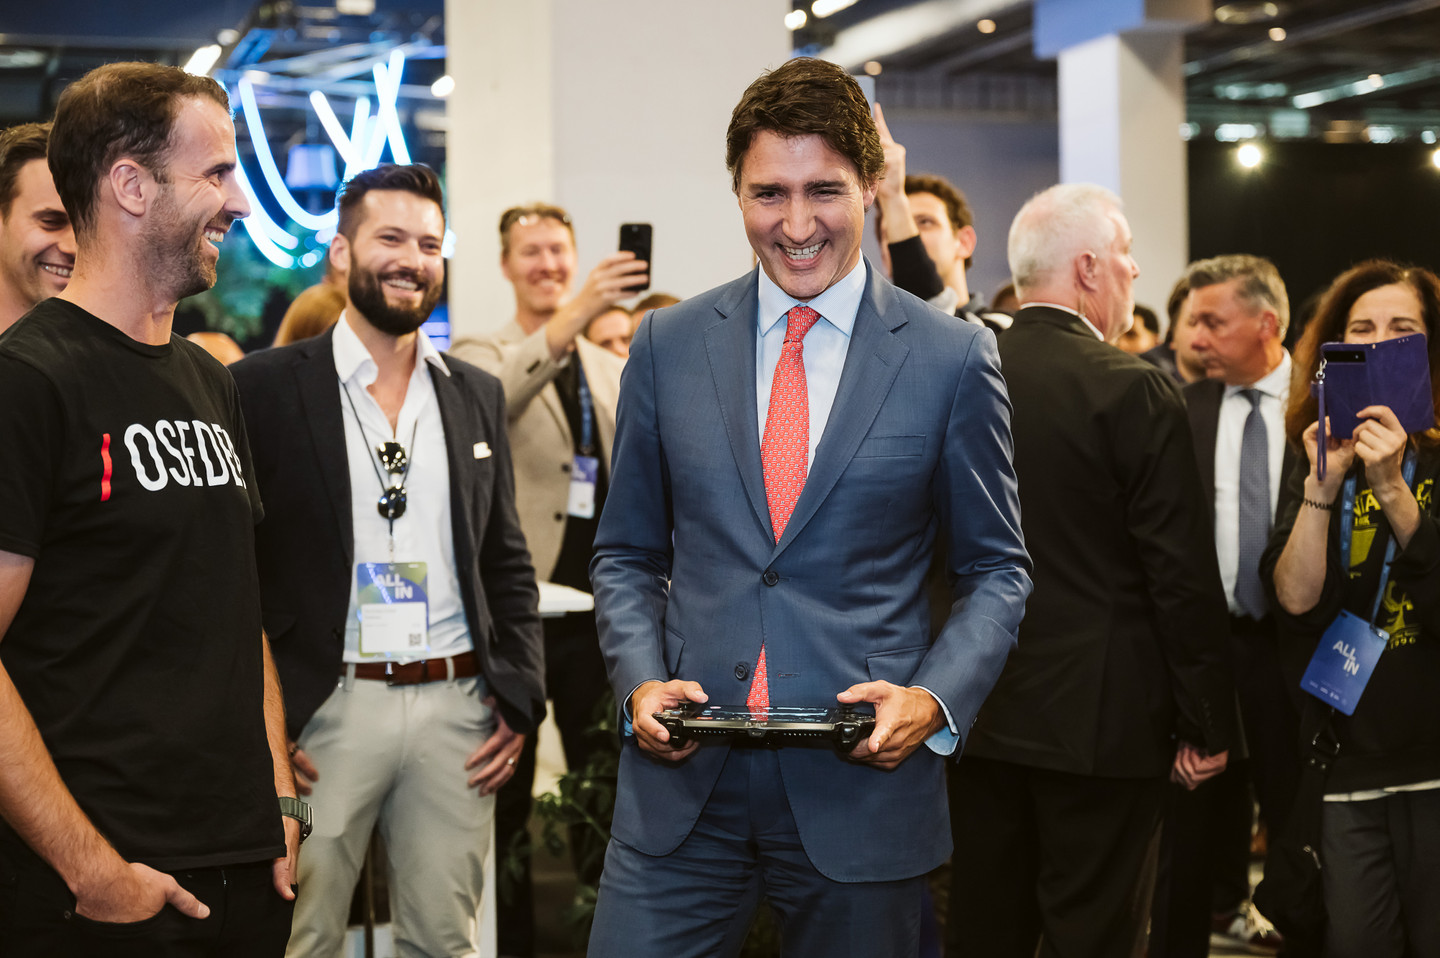 Justin Trudeau having fun controlling Spot